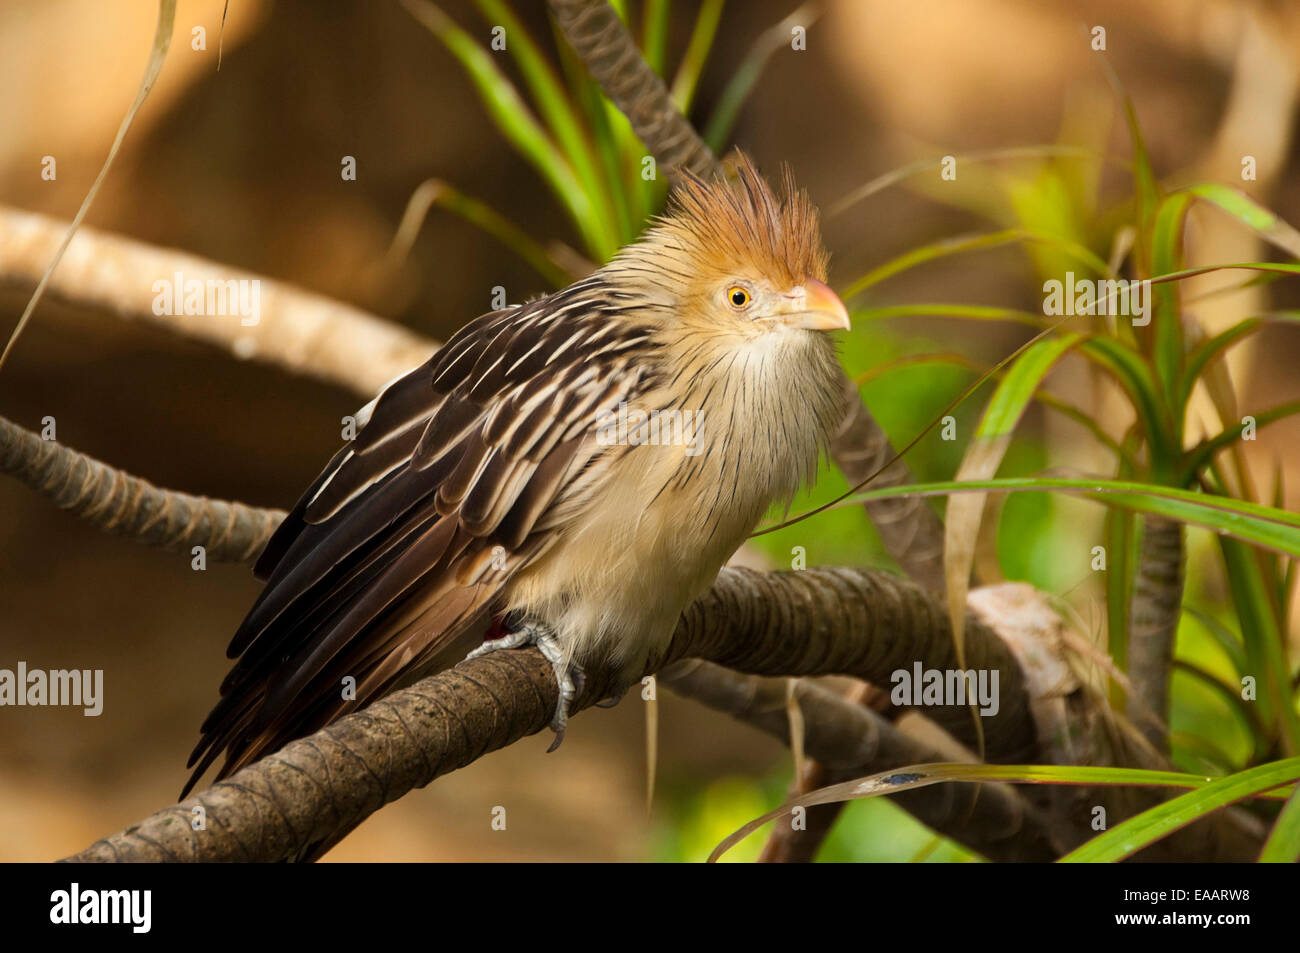 Horizontal close up of a Guira cuckoo, Guira guira, in an aviary. Stock Photo